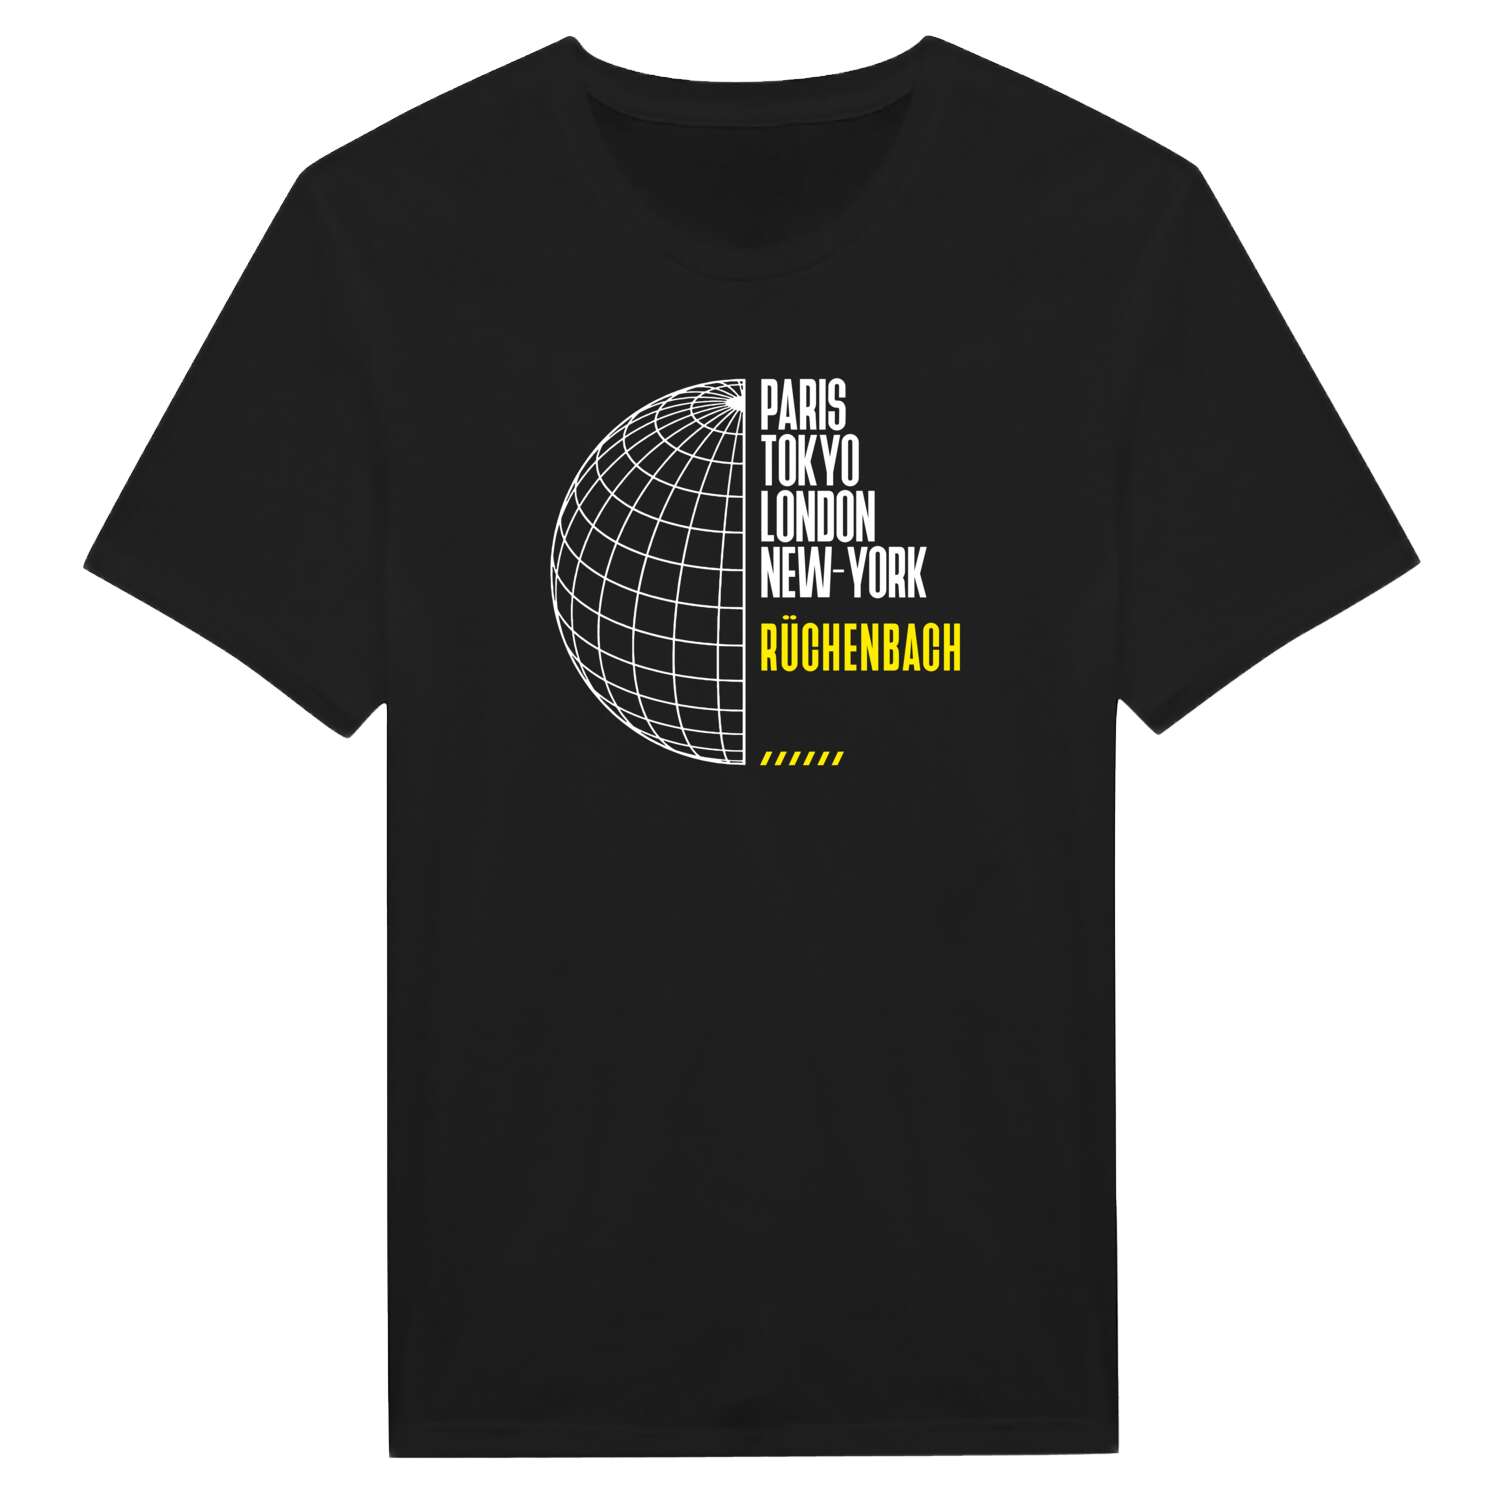 Rüchenbach T-Shirt »Paris Tokyo London«